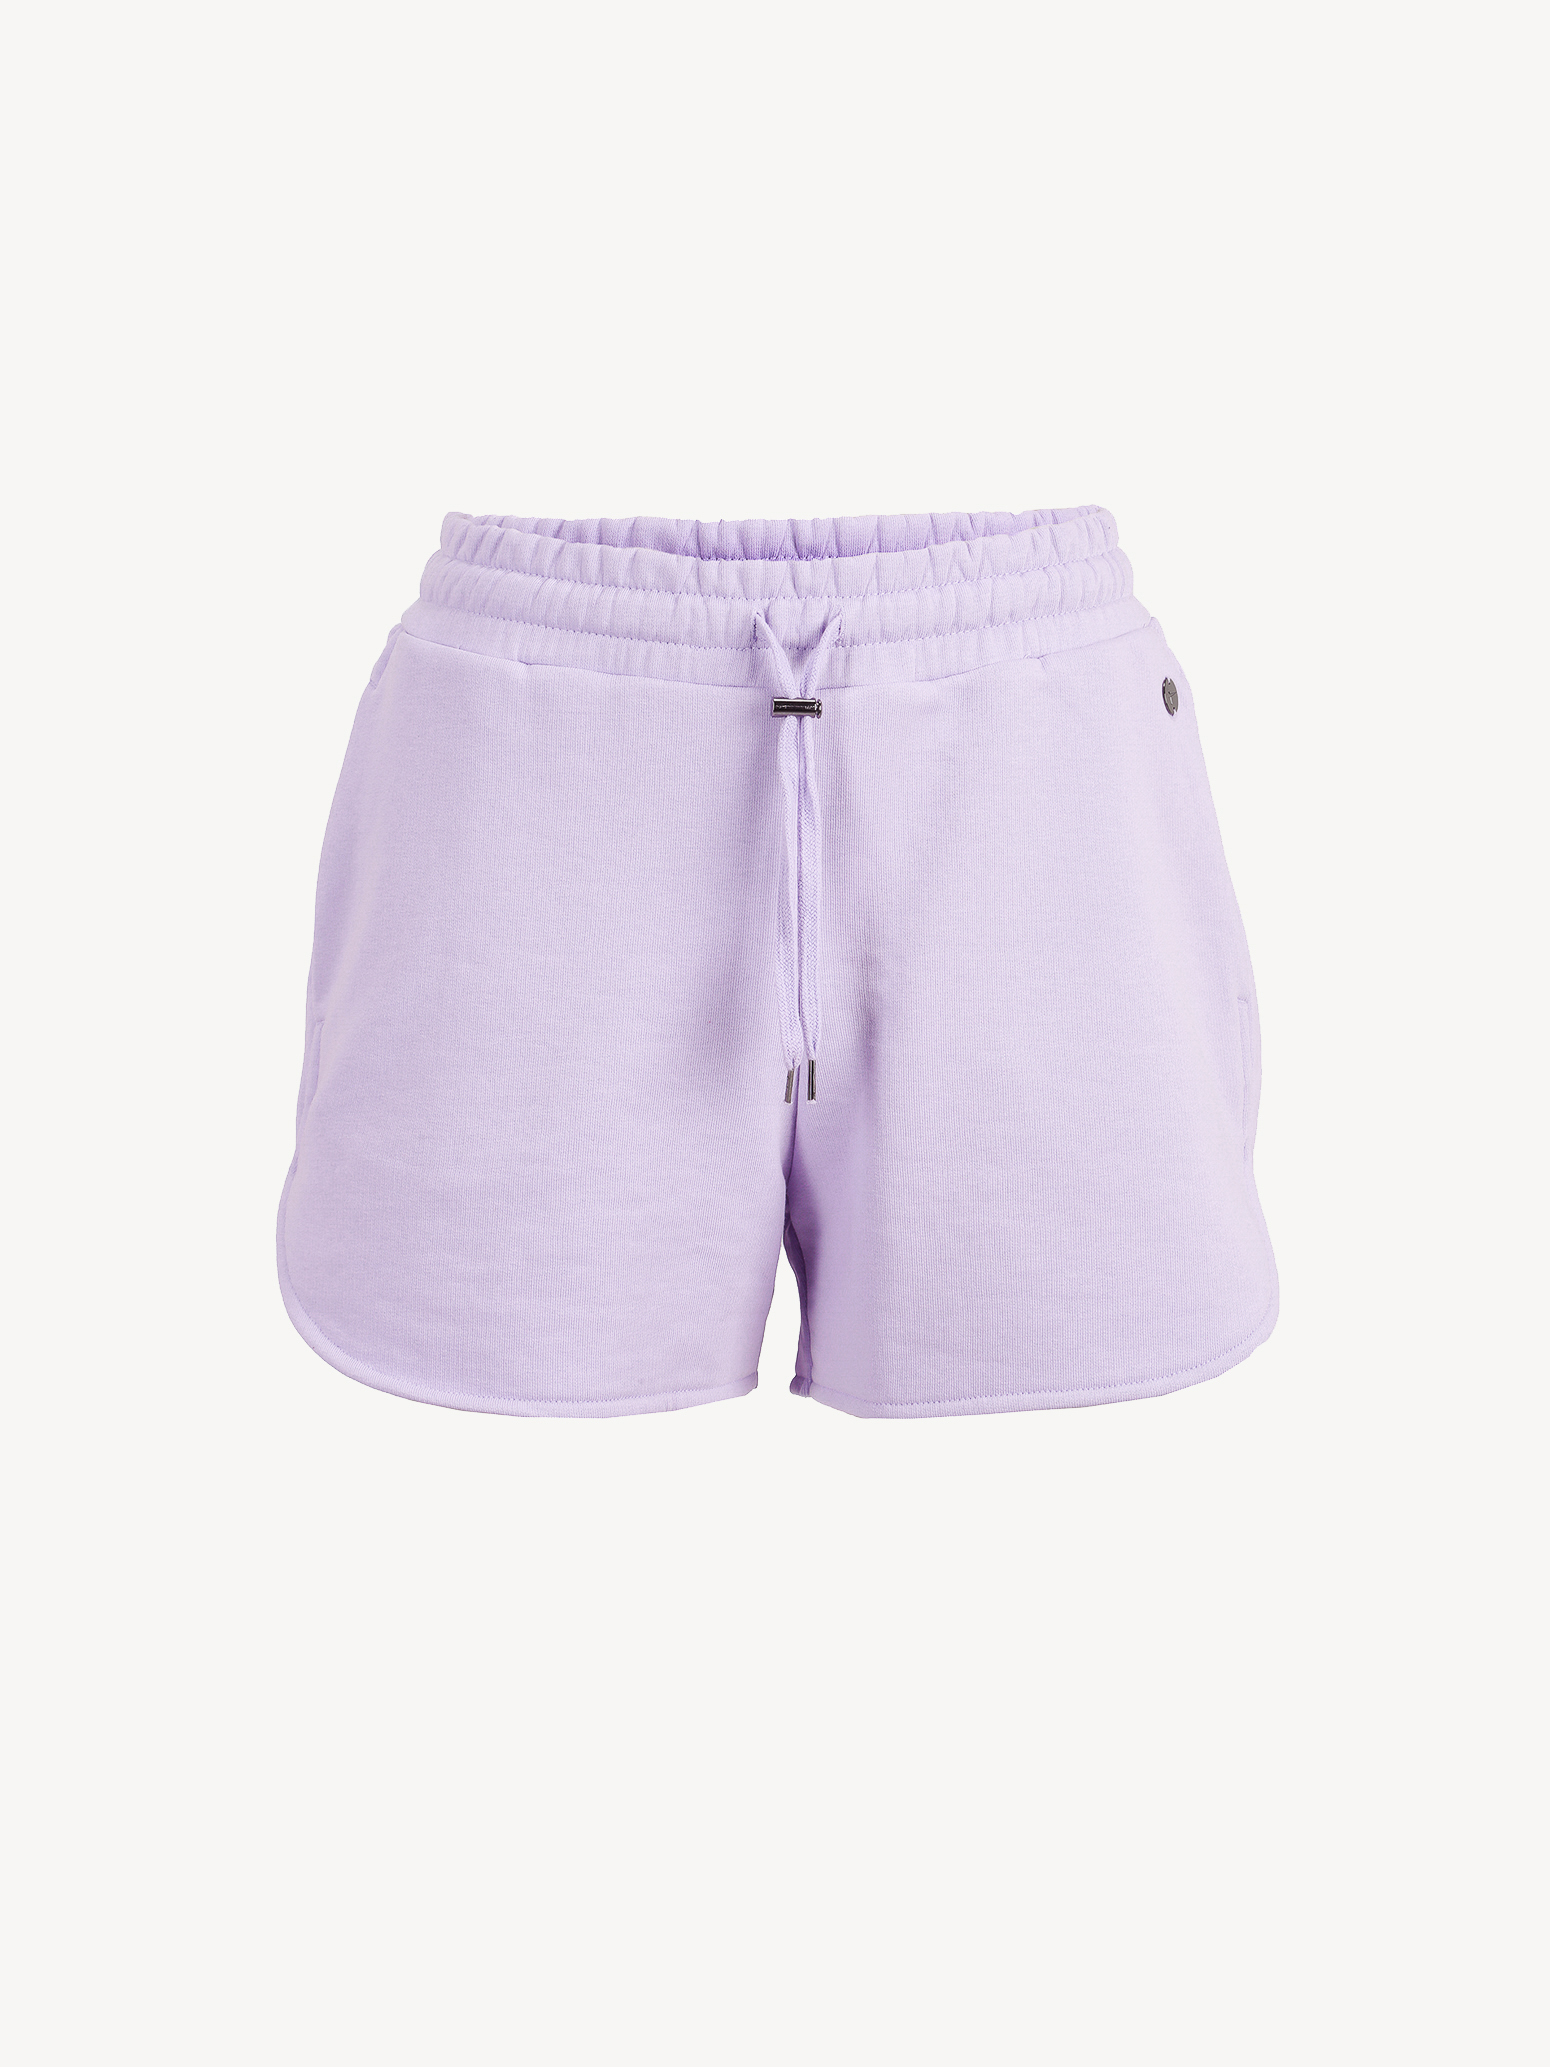 Jogging bottoms - purple, Lavender, hi-res